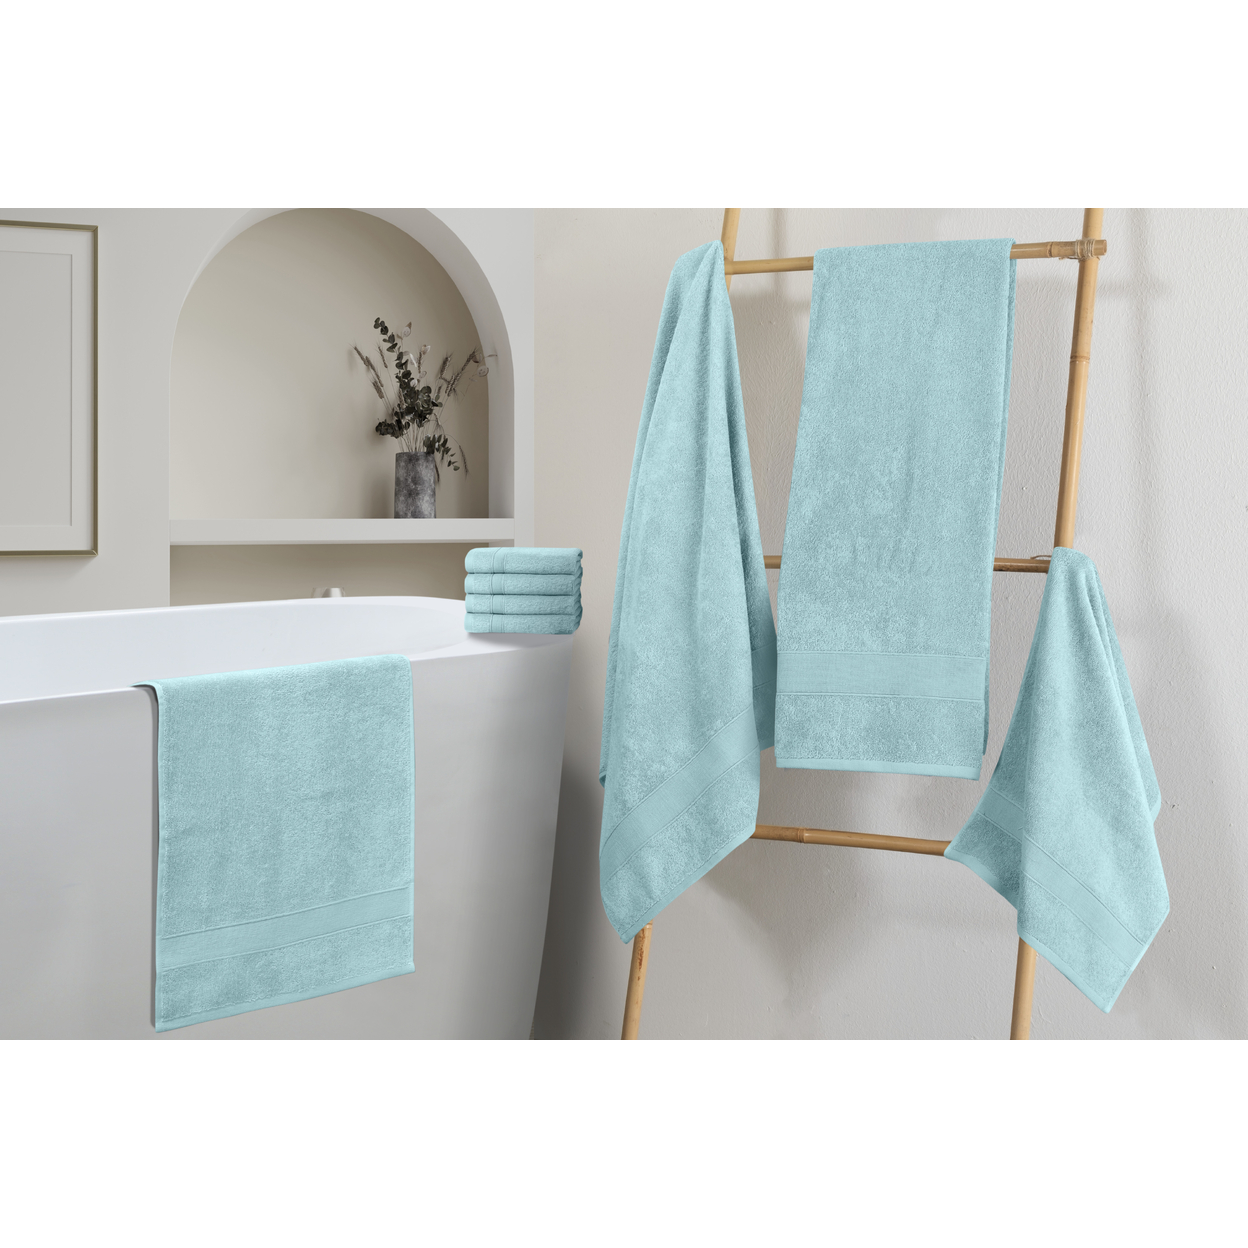 Chic Home Premium 8-Piece 100% Pure Turkish Cotton Towel Set, Woven Dobby Border Design, OEKO-TEX Standard 100 Certified - Blue